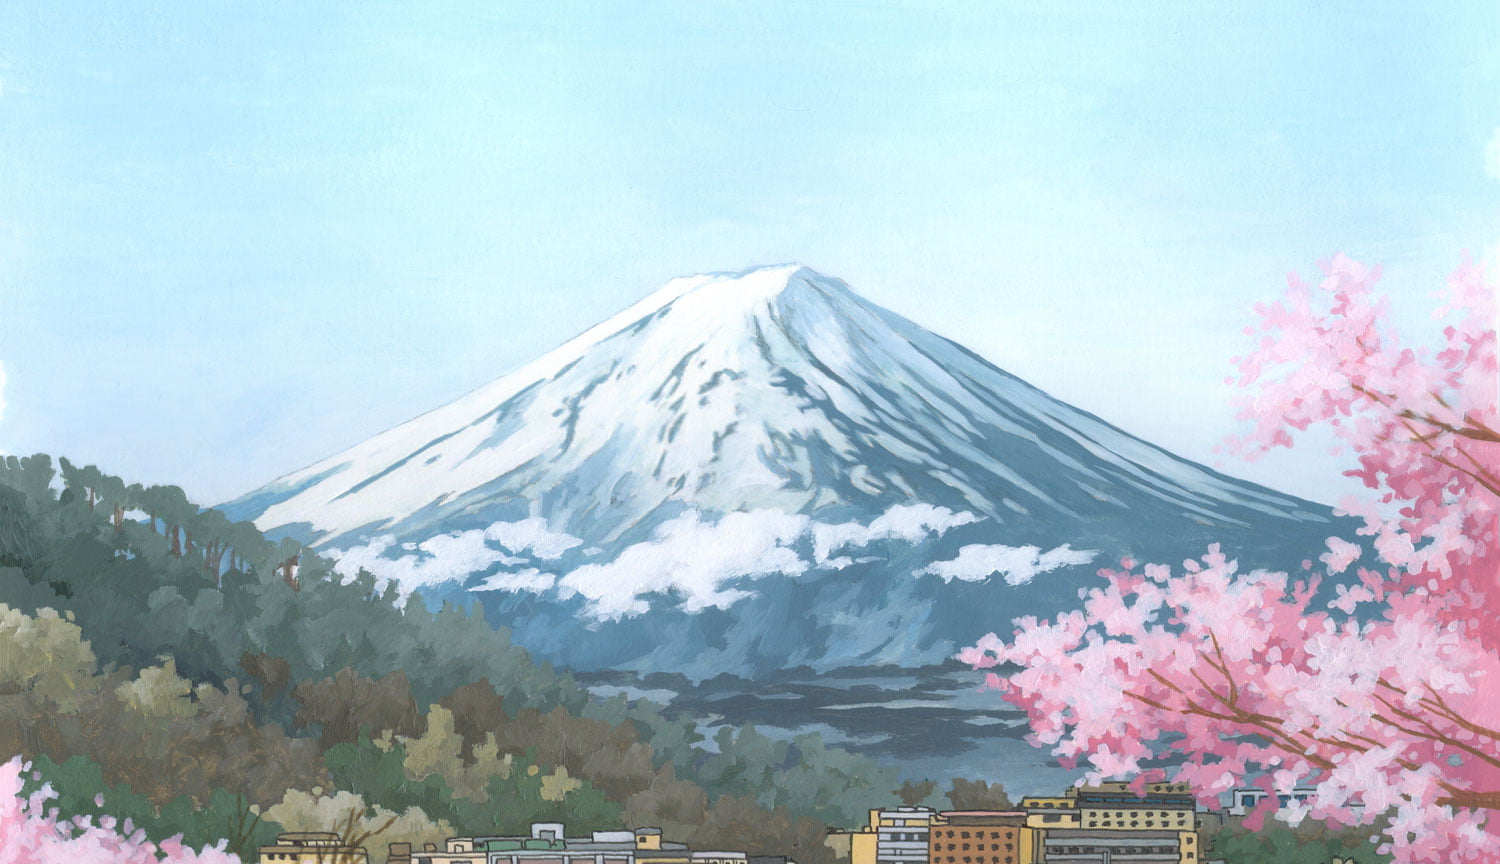 Mount Fuji, Japan by Jonathan Chapman